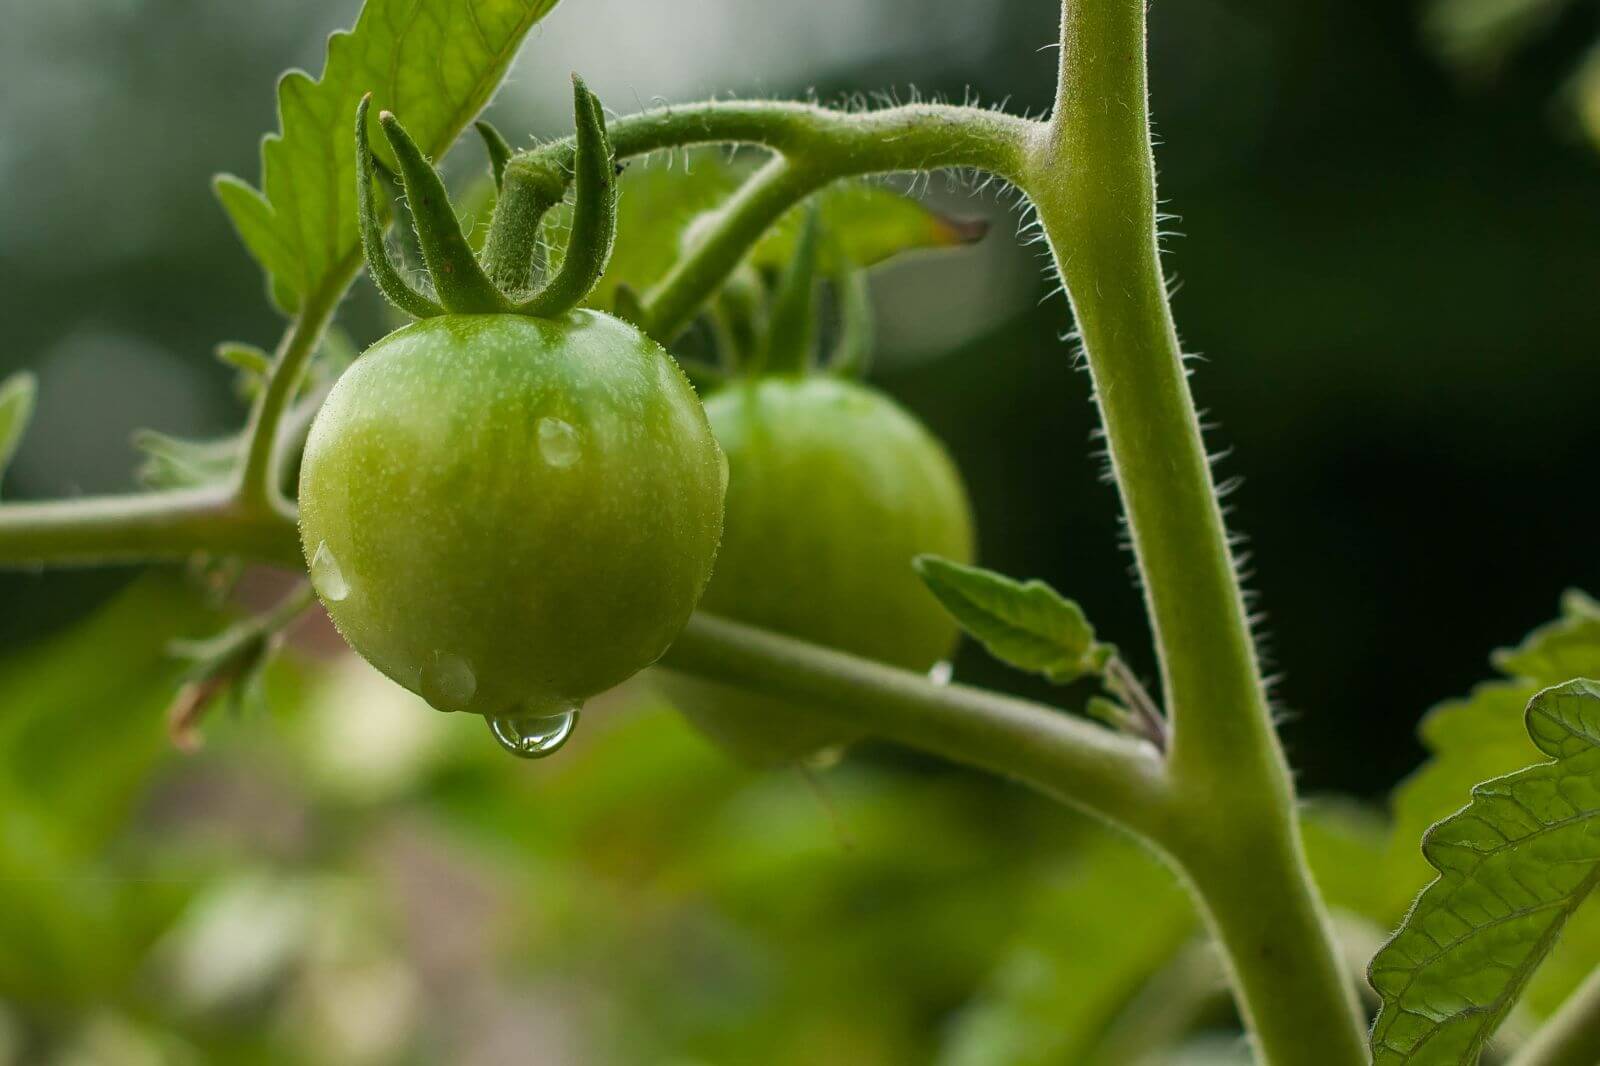 Carbotecnia Si for tomato transplant